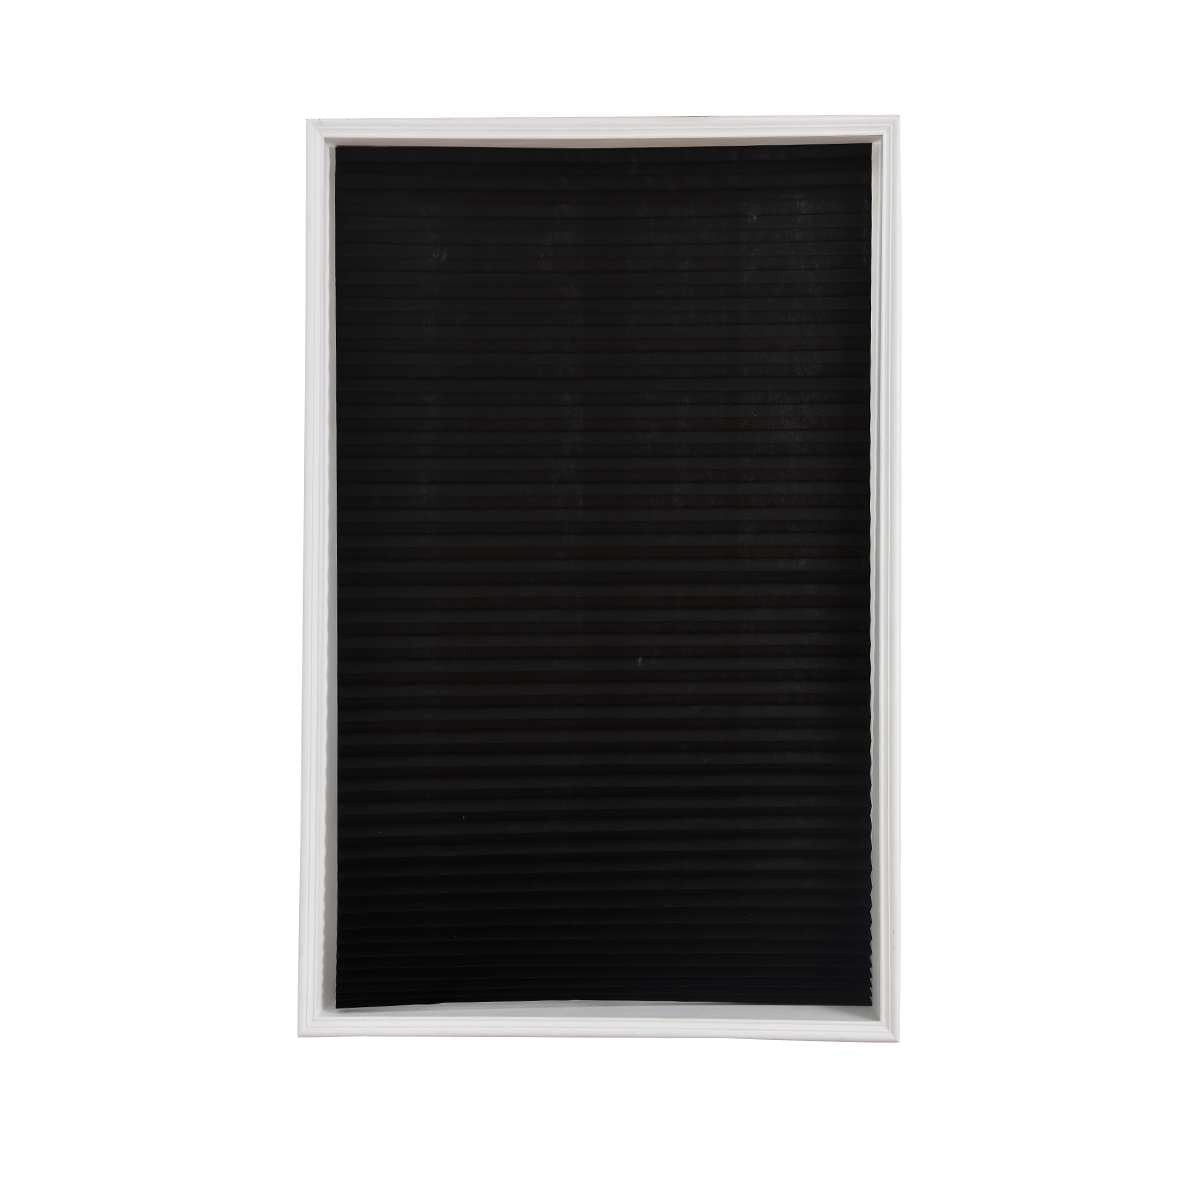 Window Pleated Curtain Bathroom Blackout Cover Shade Self Adhesive Bedroom Decor 